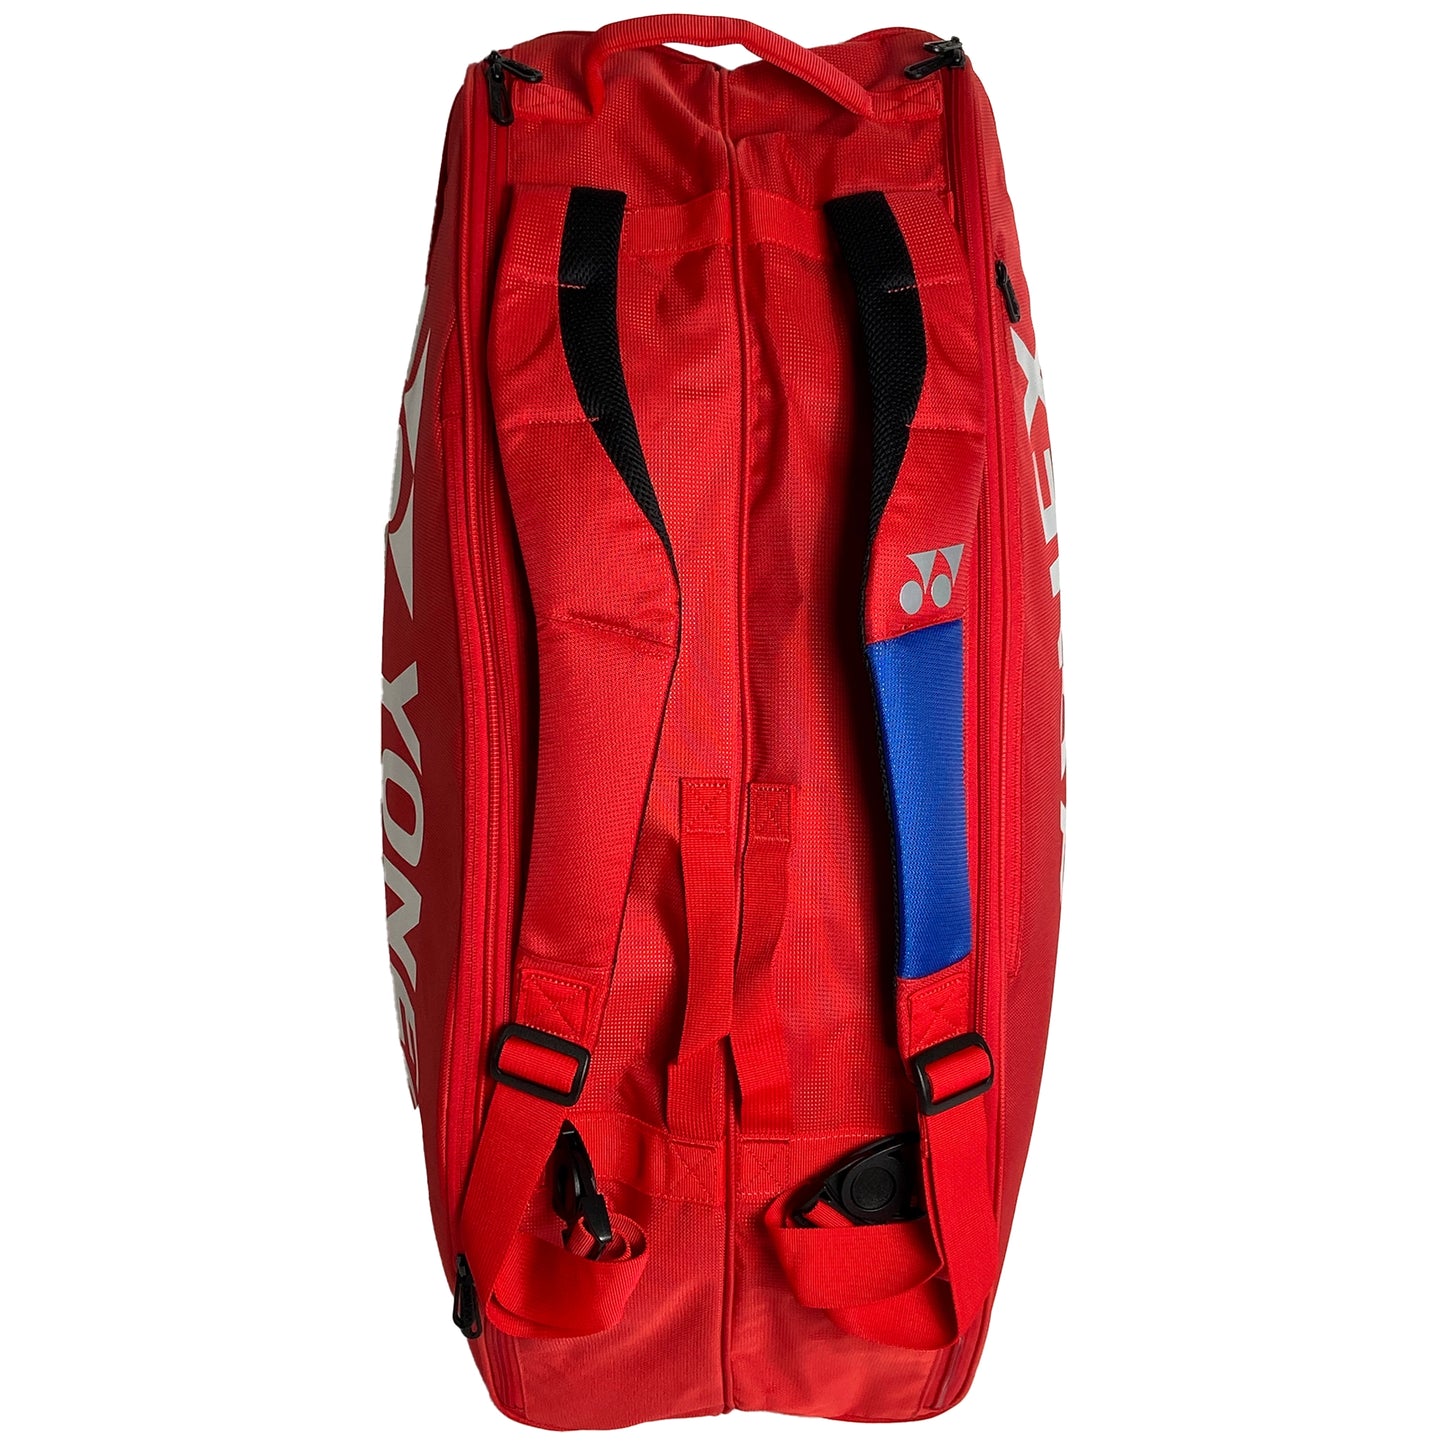 Yonex Pro Racquet Bag 6R (BAG92426) Scarlet